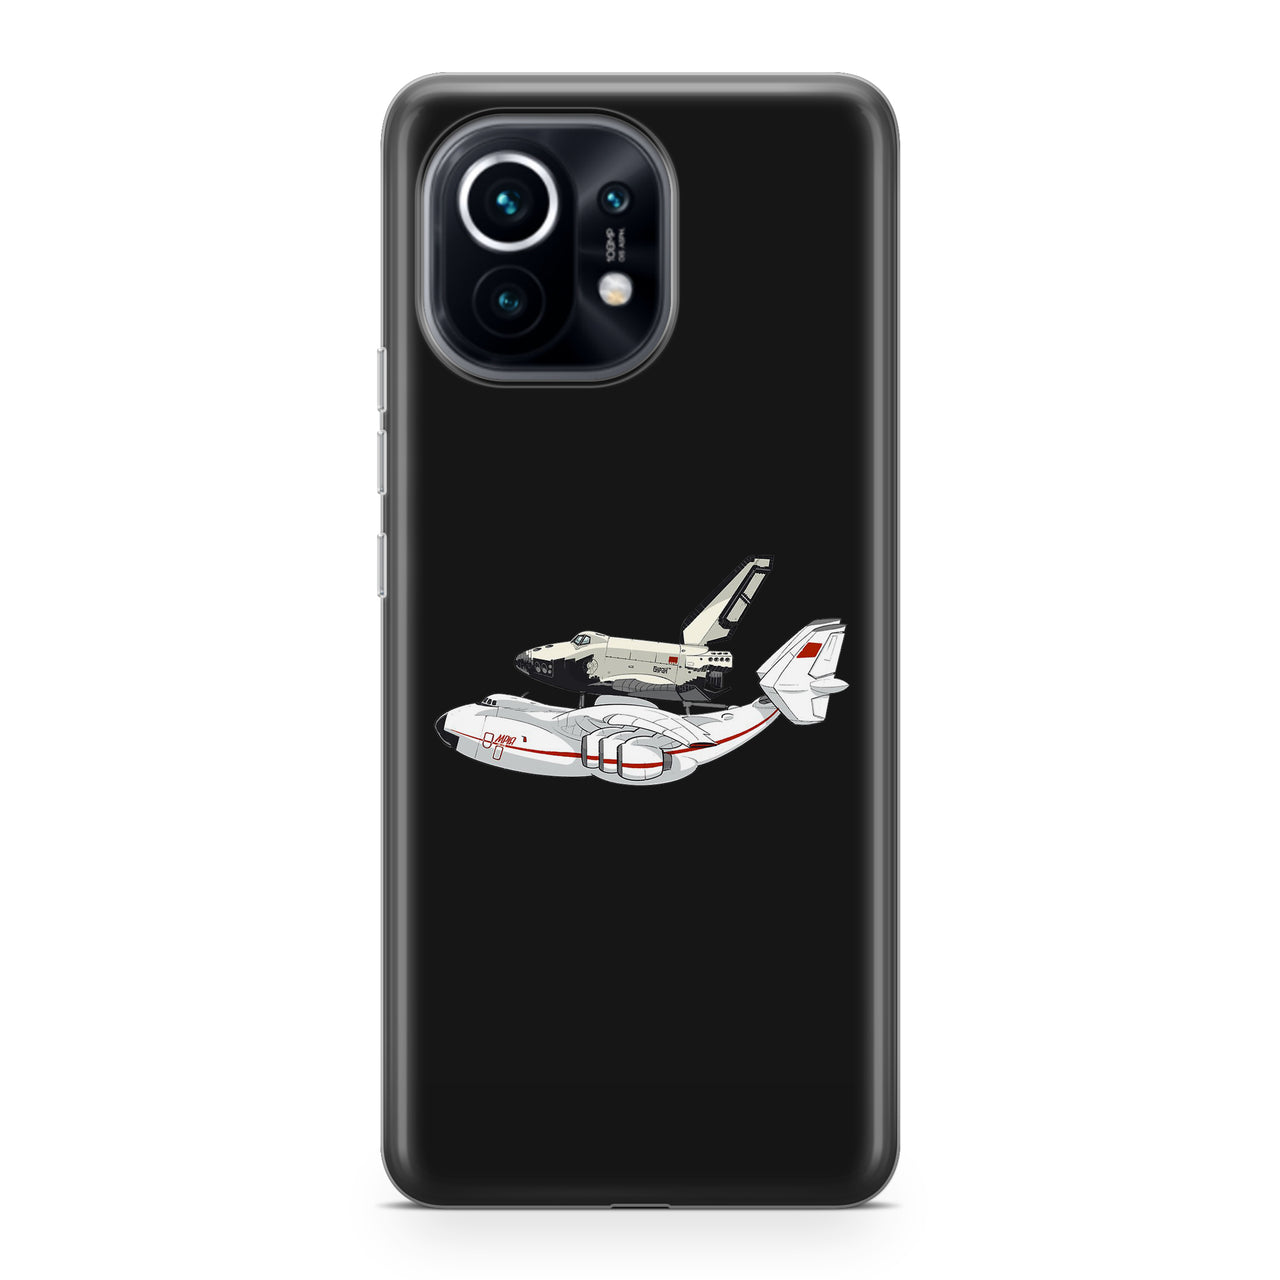 Buran & An-225 Designed Xiaomi Cases